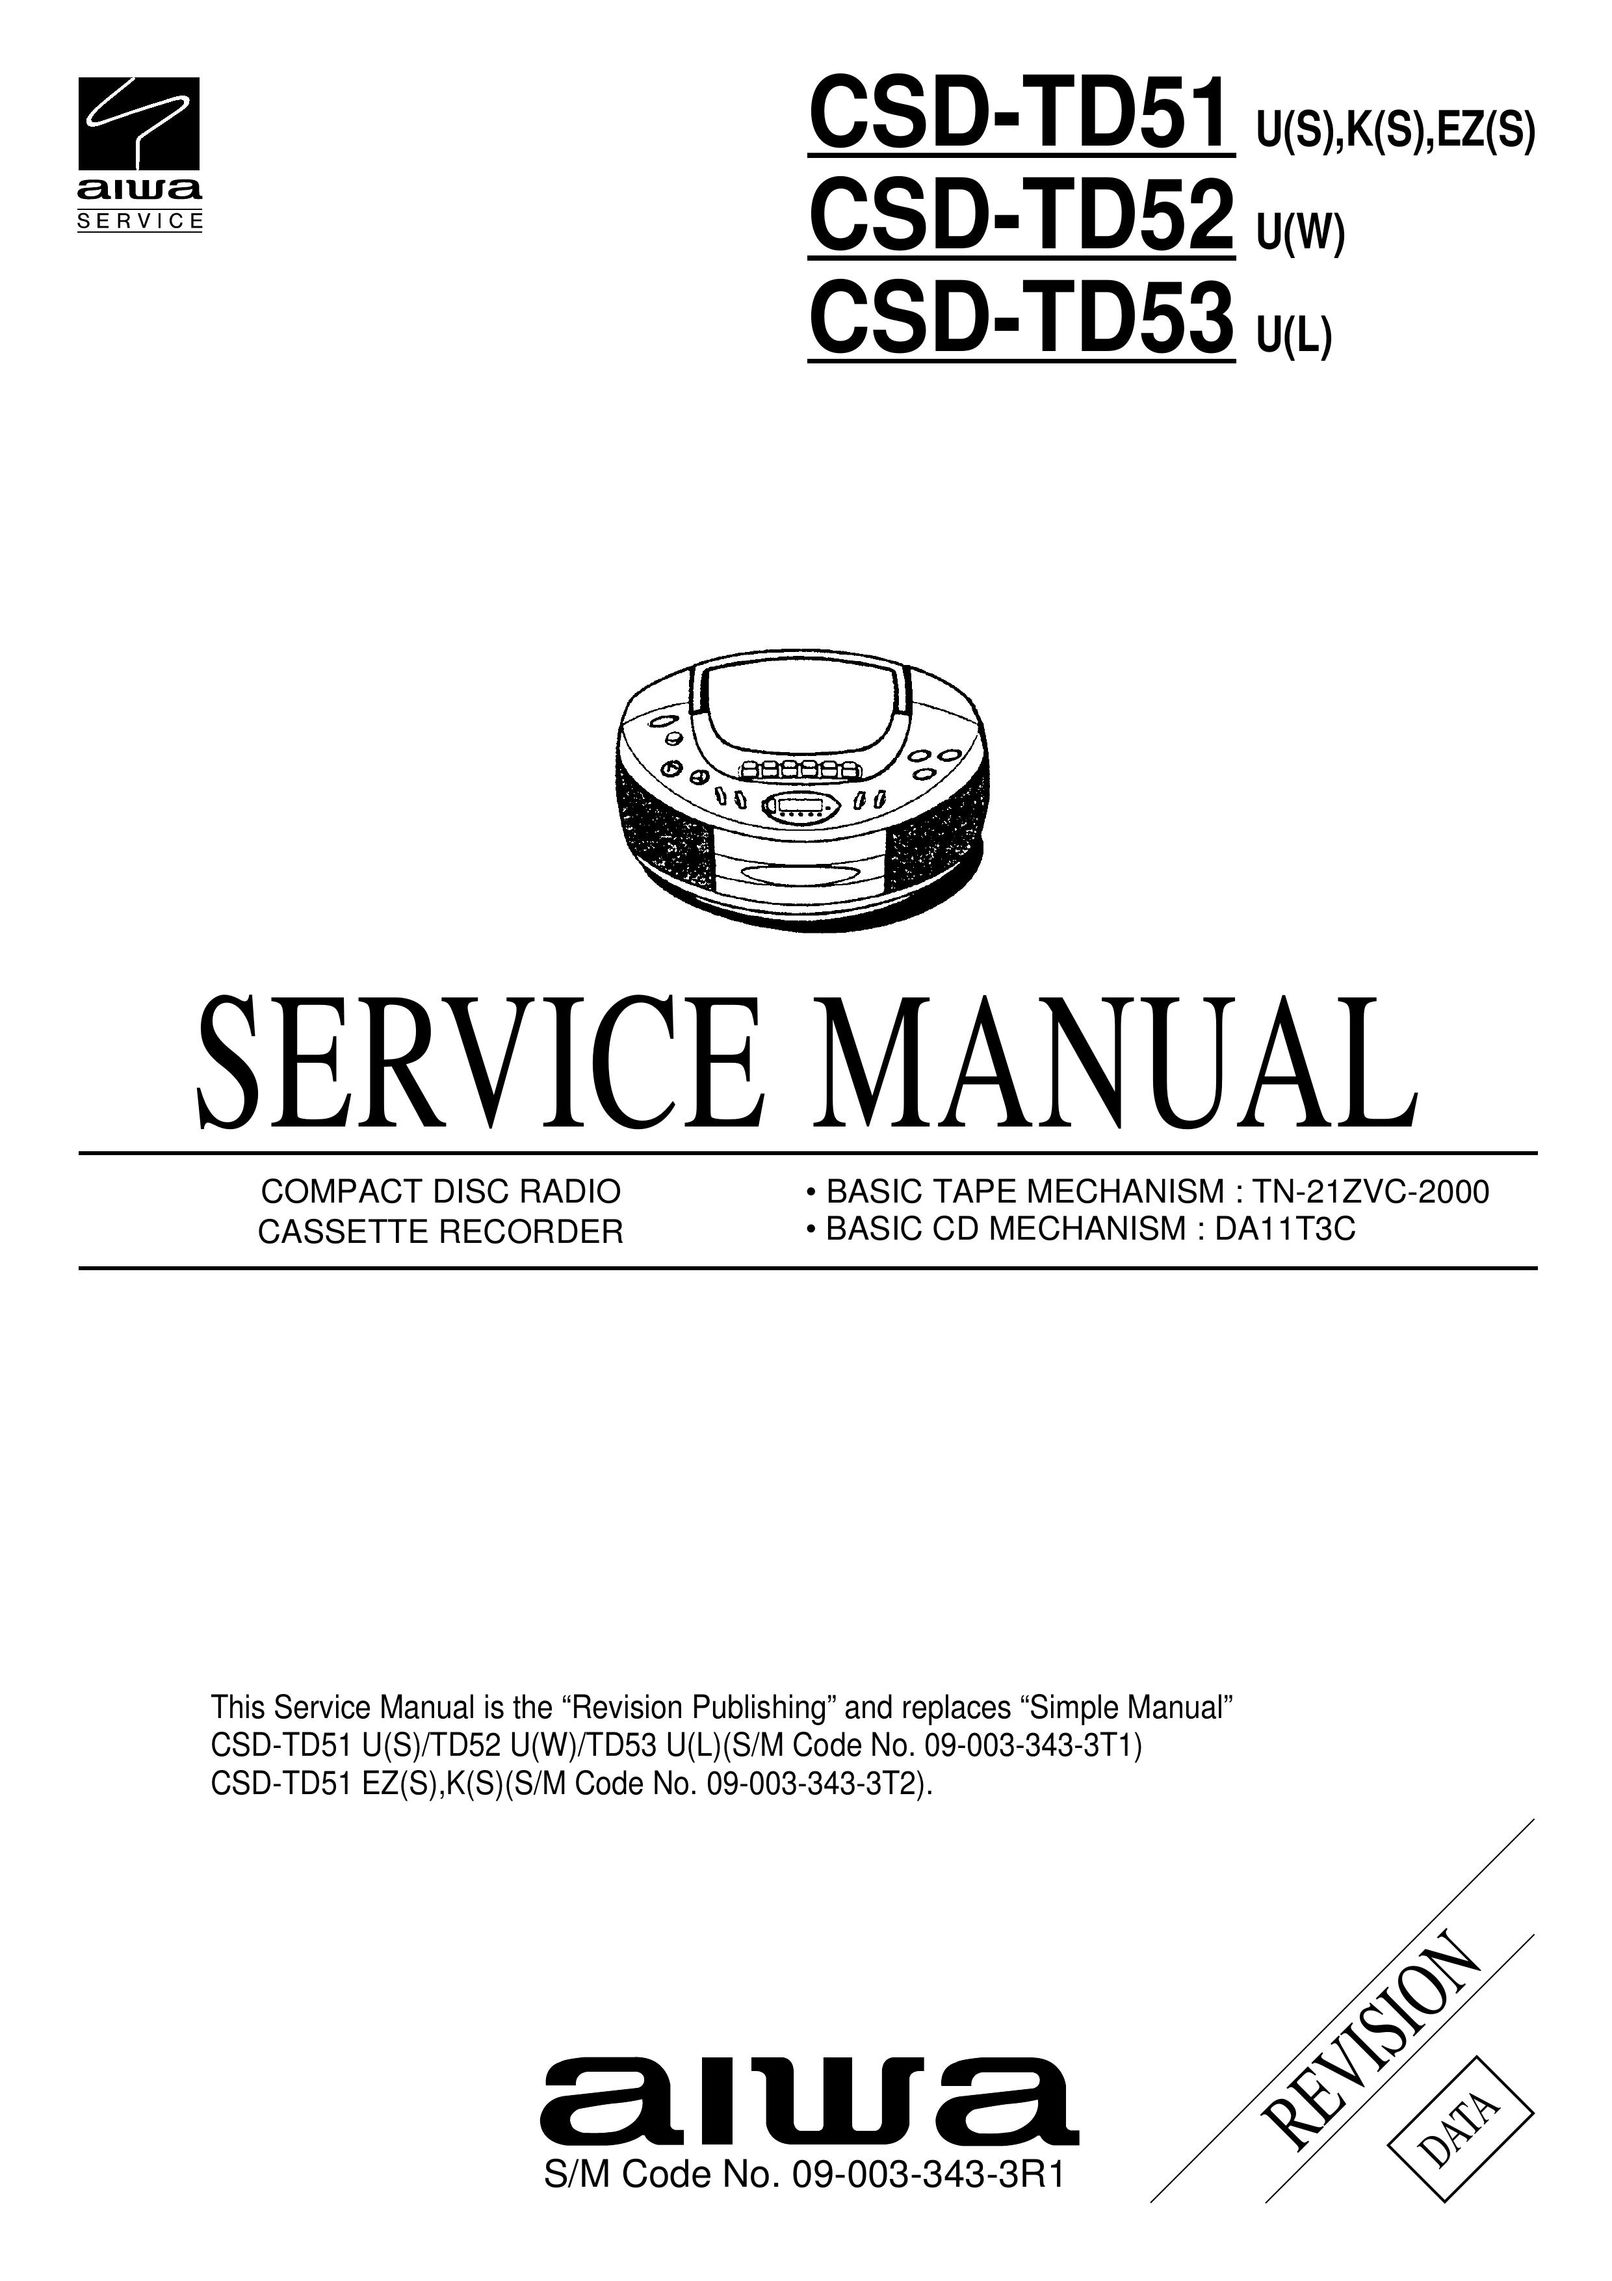 Aiwa CSD-TD52 CD Player User Manual (Page 1)